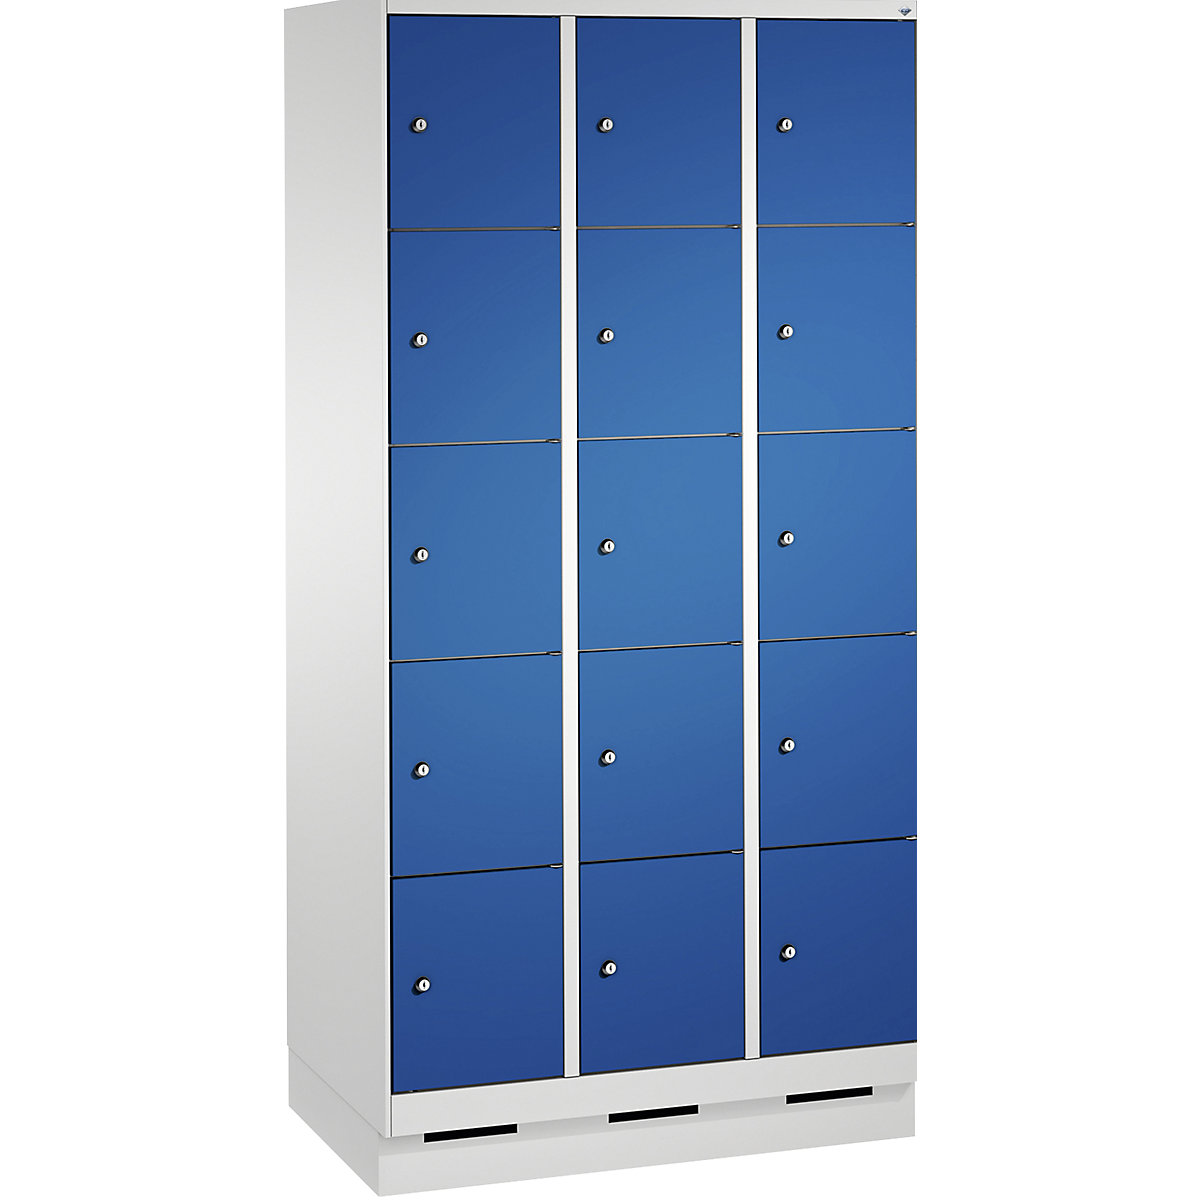 EVOLO locker unit, with plinth – C+P, 3 compartments, 5 shelf compartments each, compartment width 300 mm, light grey / gentian blue